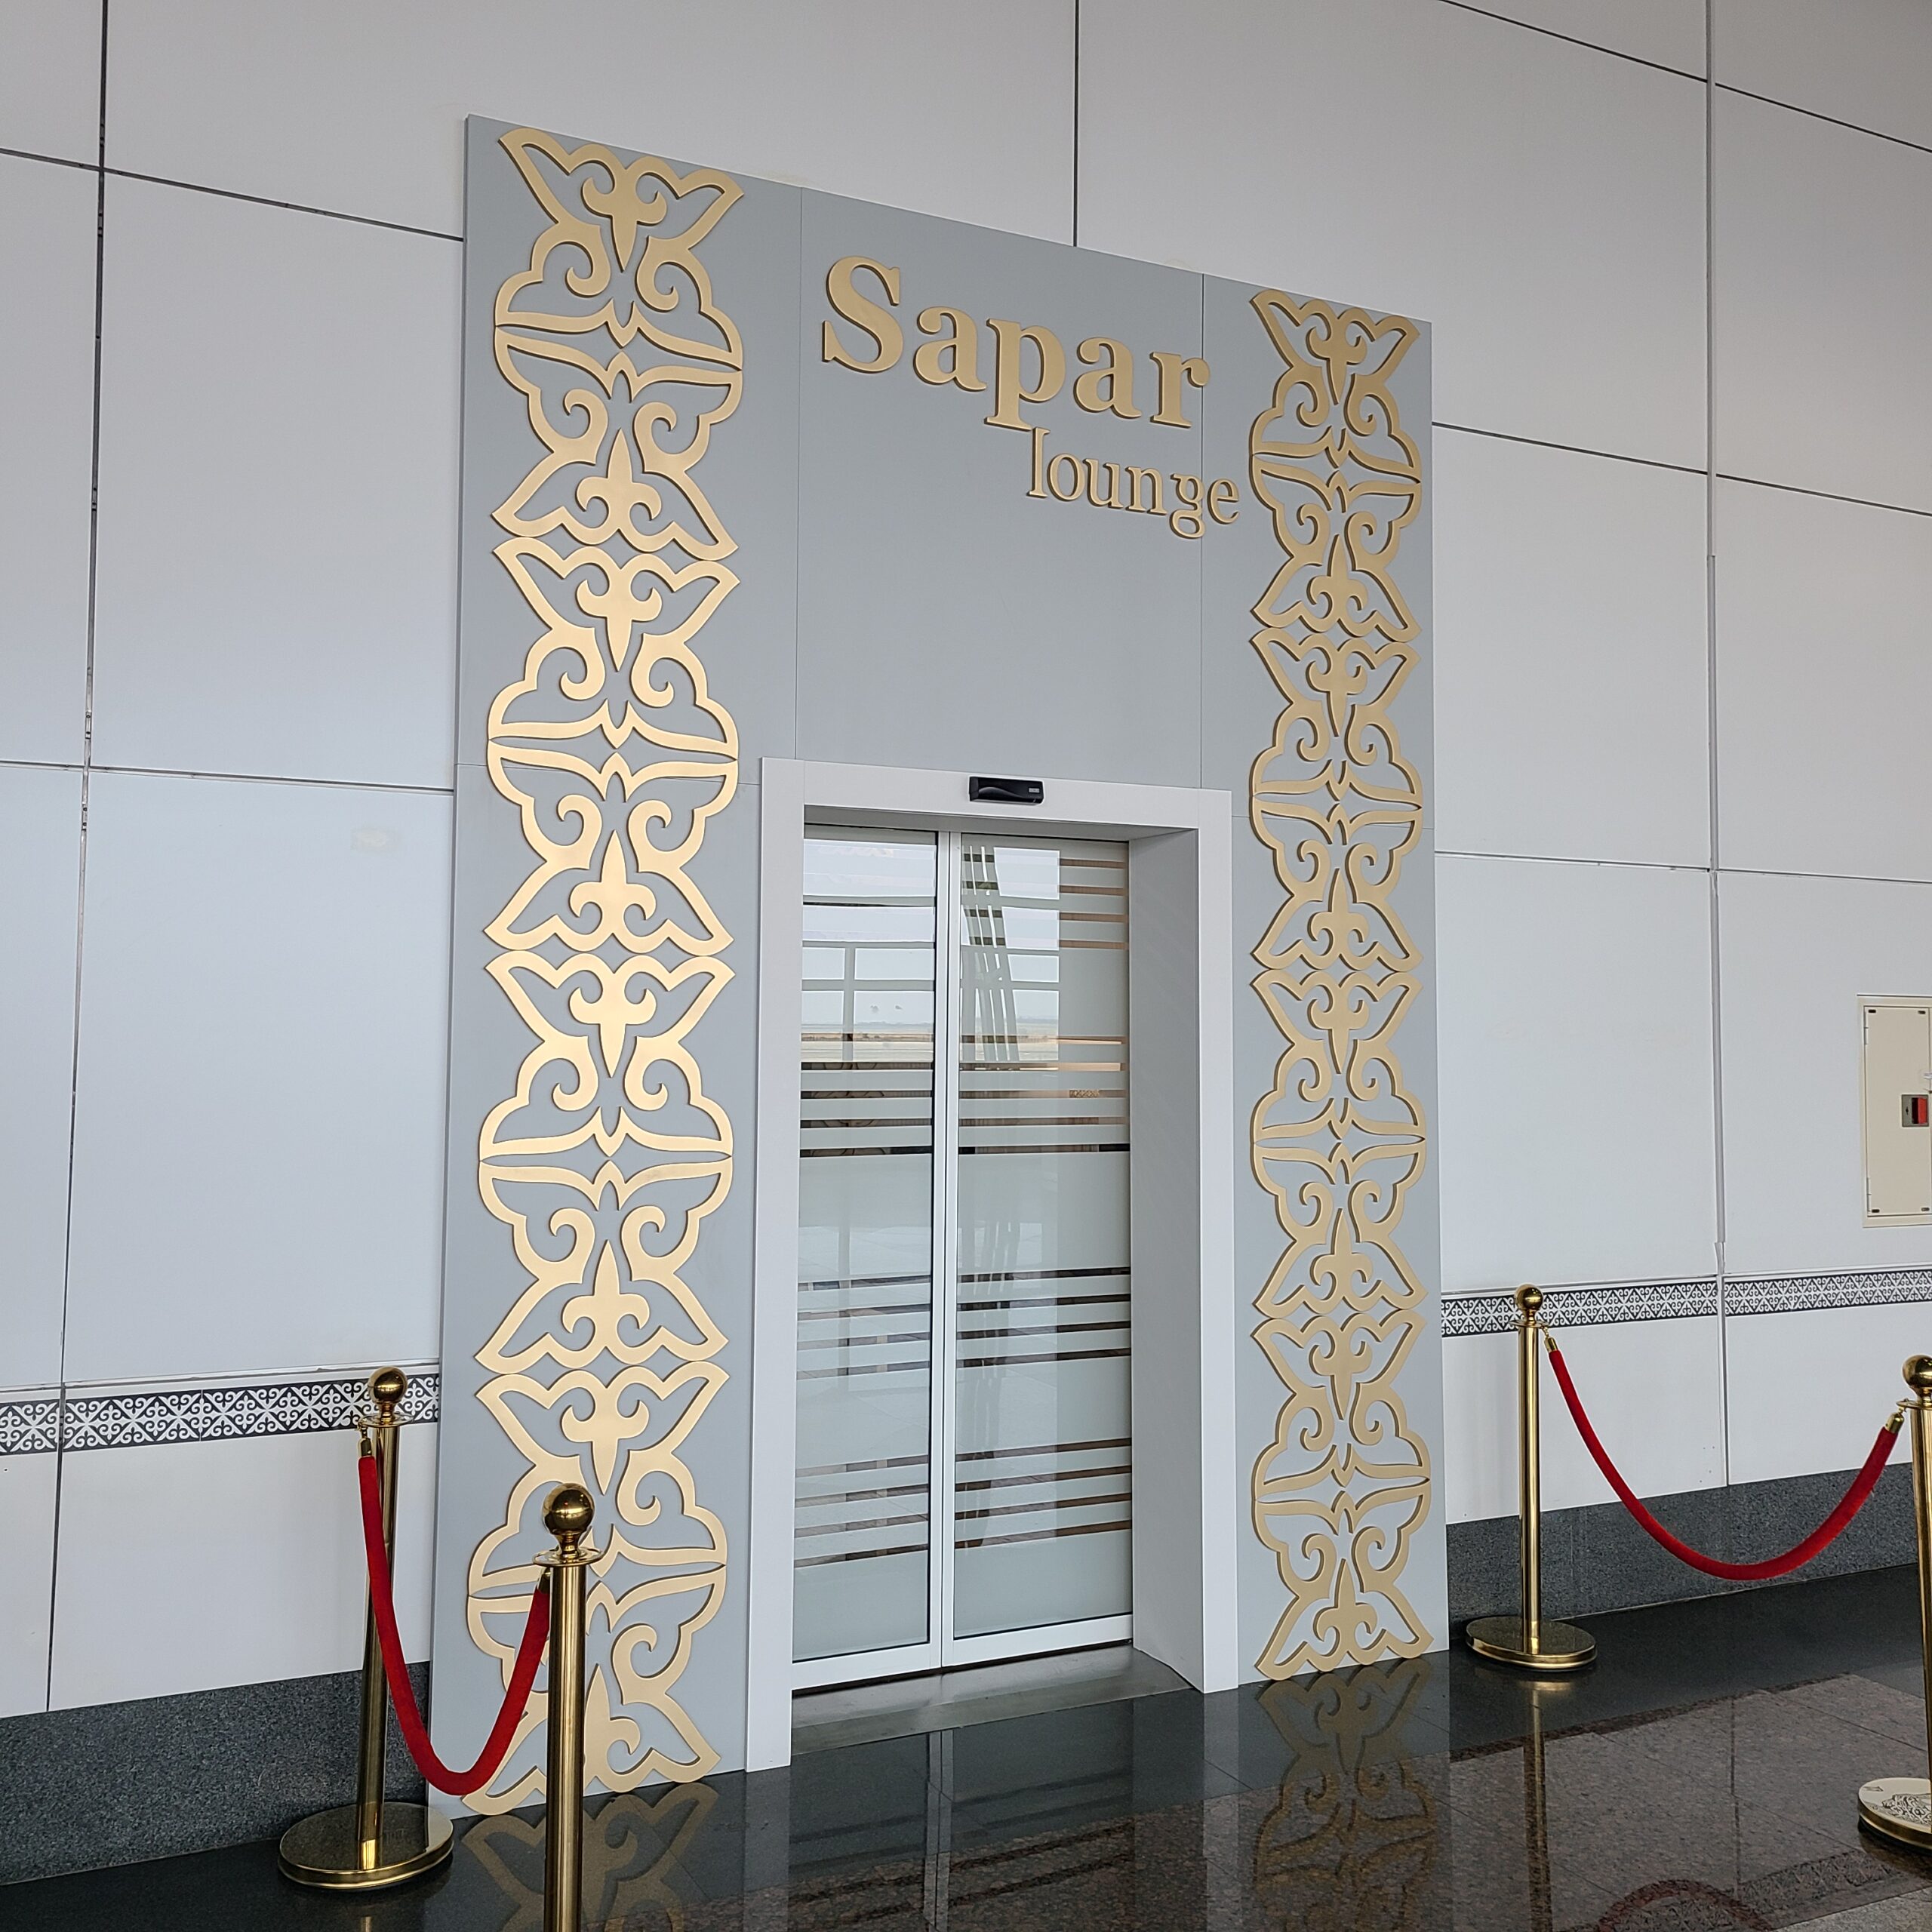 Sapar Lounge Domestic Terminal NQZ Entrance